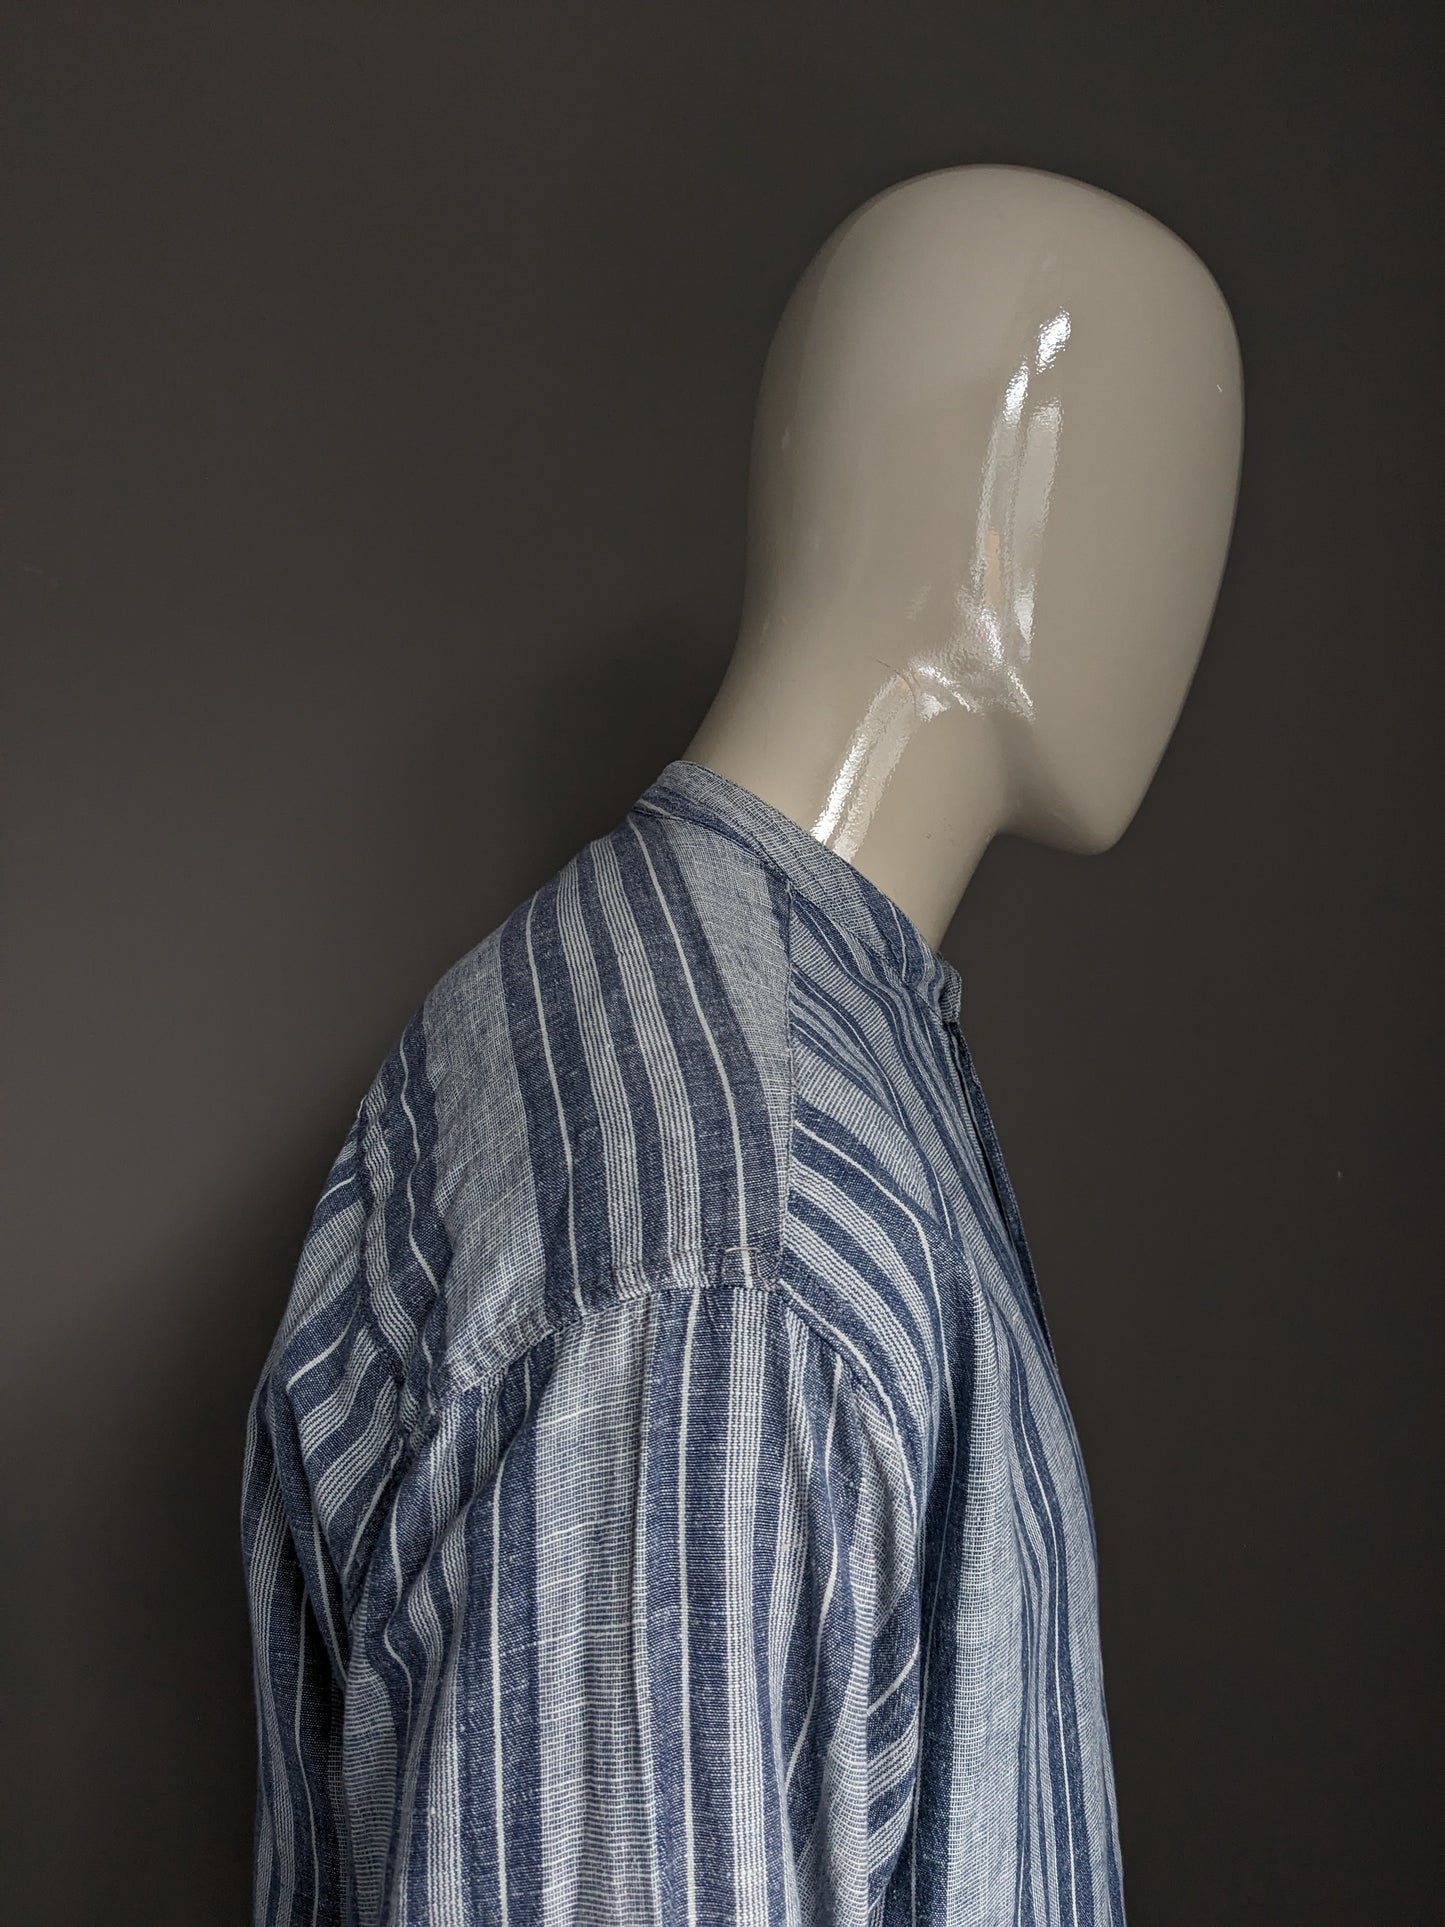 Shirt vintage Casa Blanca in posizione verticale / Farride / Mao Collar. Strisce grigio blu. Taglia XL.